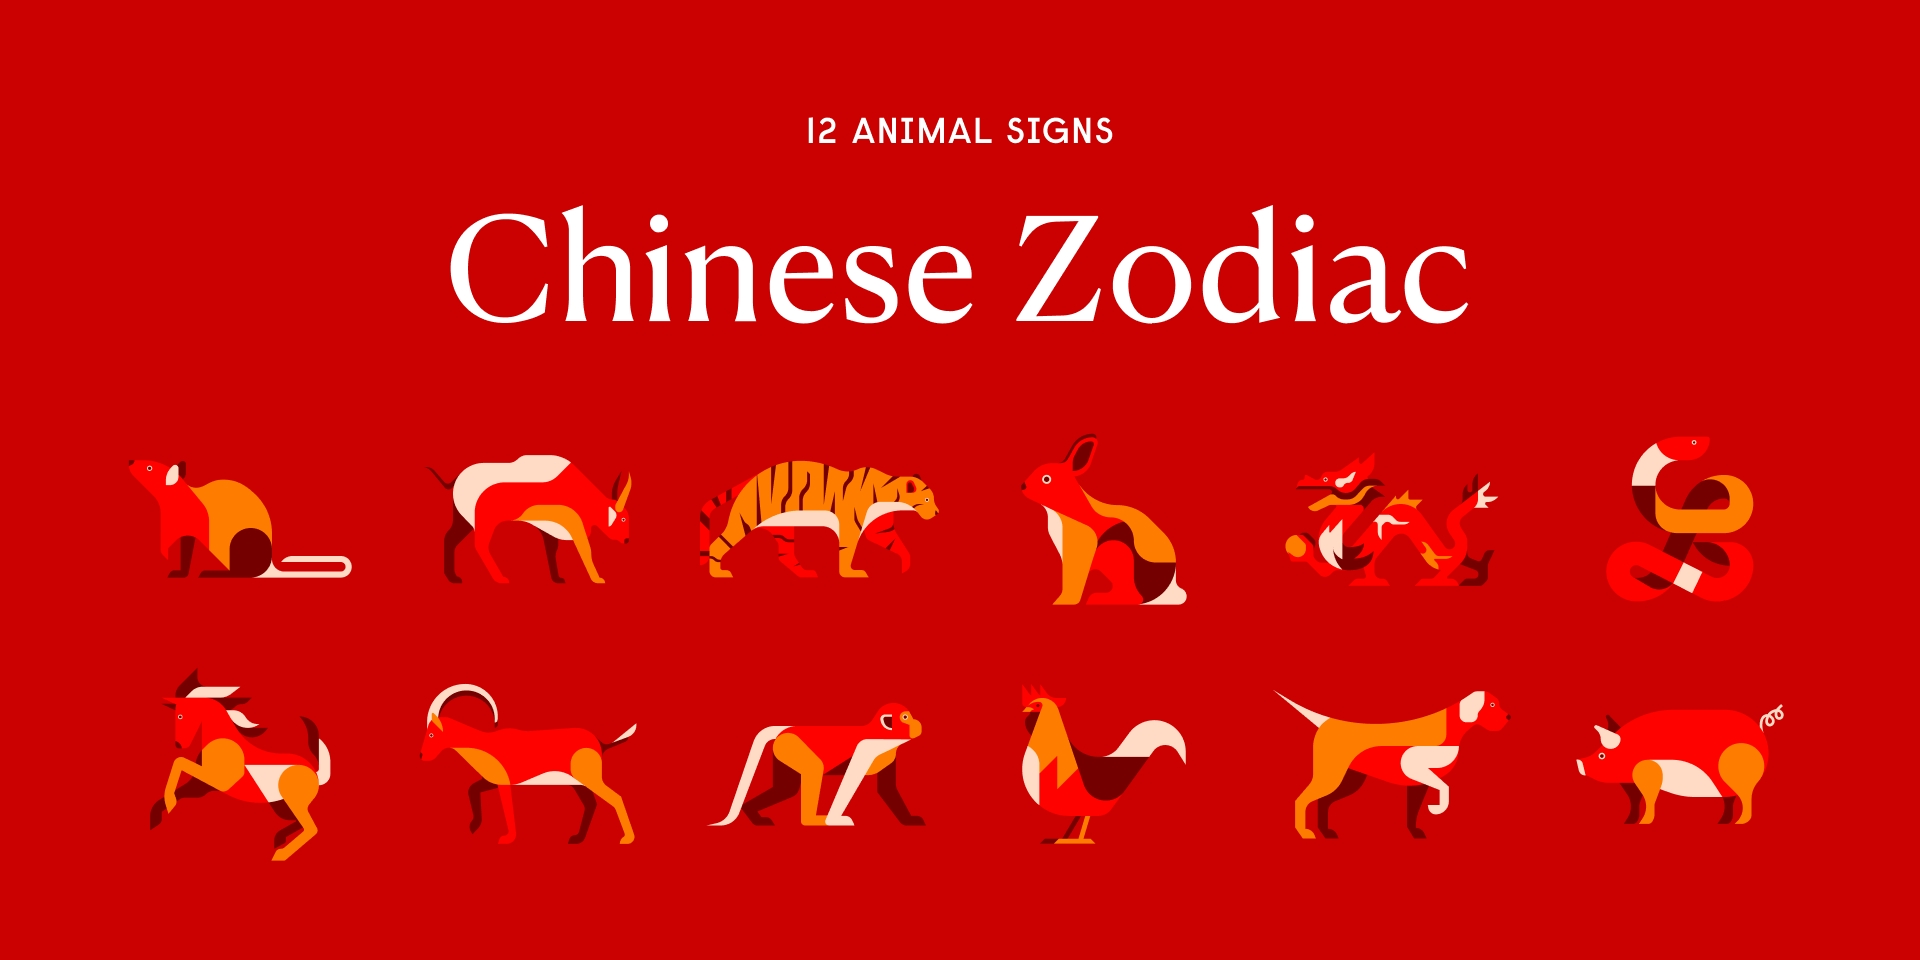 Chinese Zodiac: 12 Animal Signs, Compatibility, Horoscopes Chinese New Year Calendar Zodiac